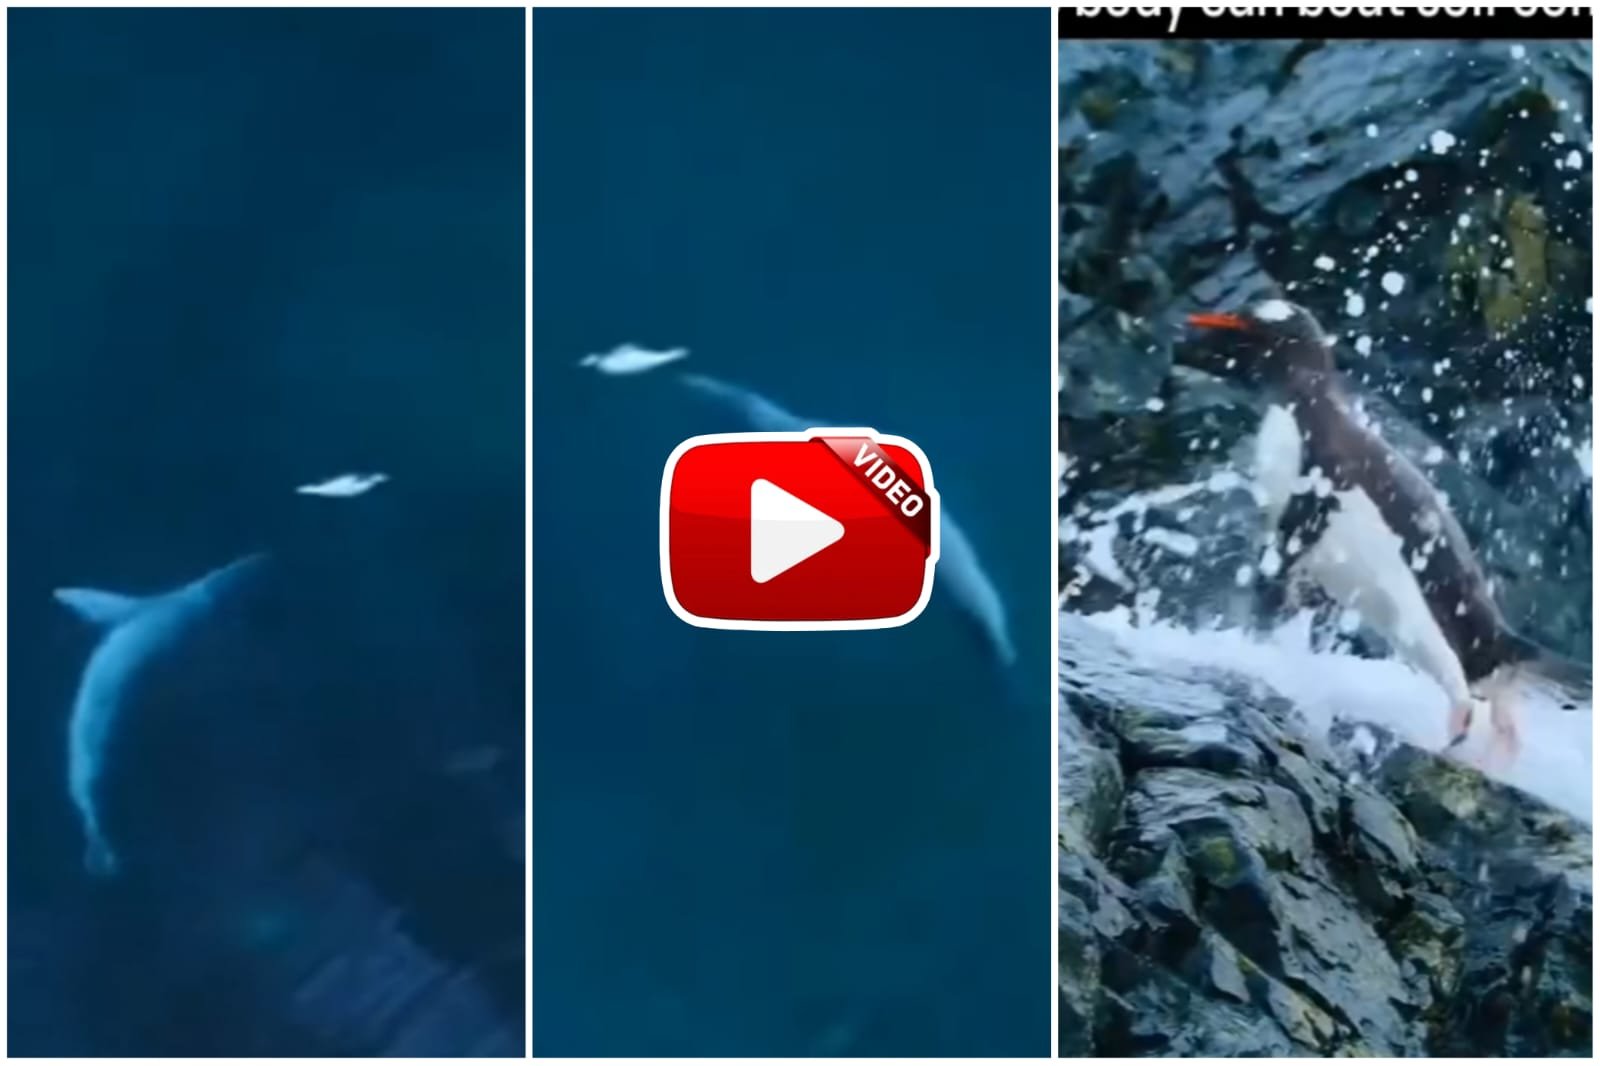 Penguin Ka Video - Penguin kept fighting alone in the sea.